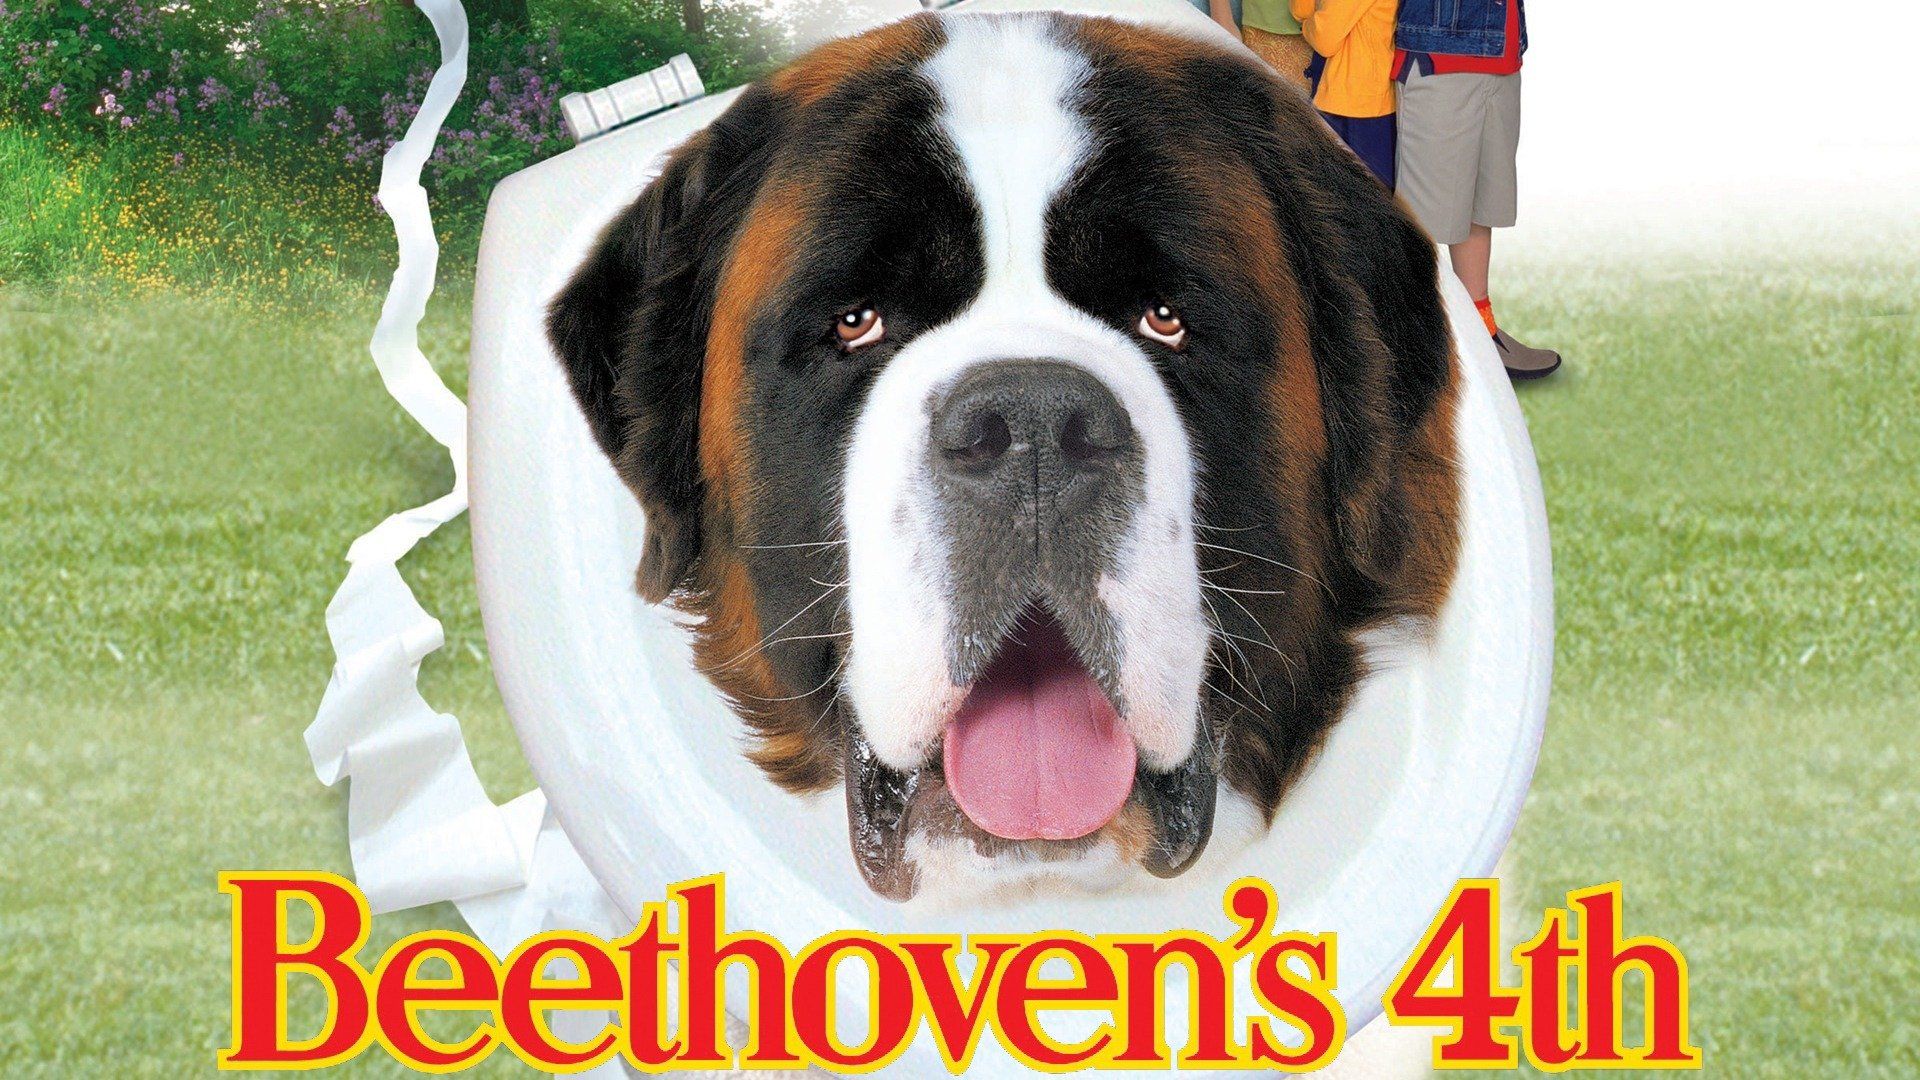 Watch Beethoven's 4th (2001) Full Movie Online - Plex